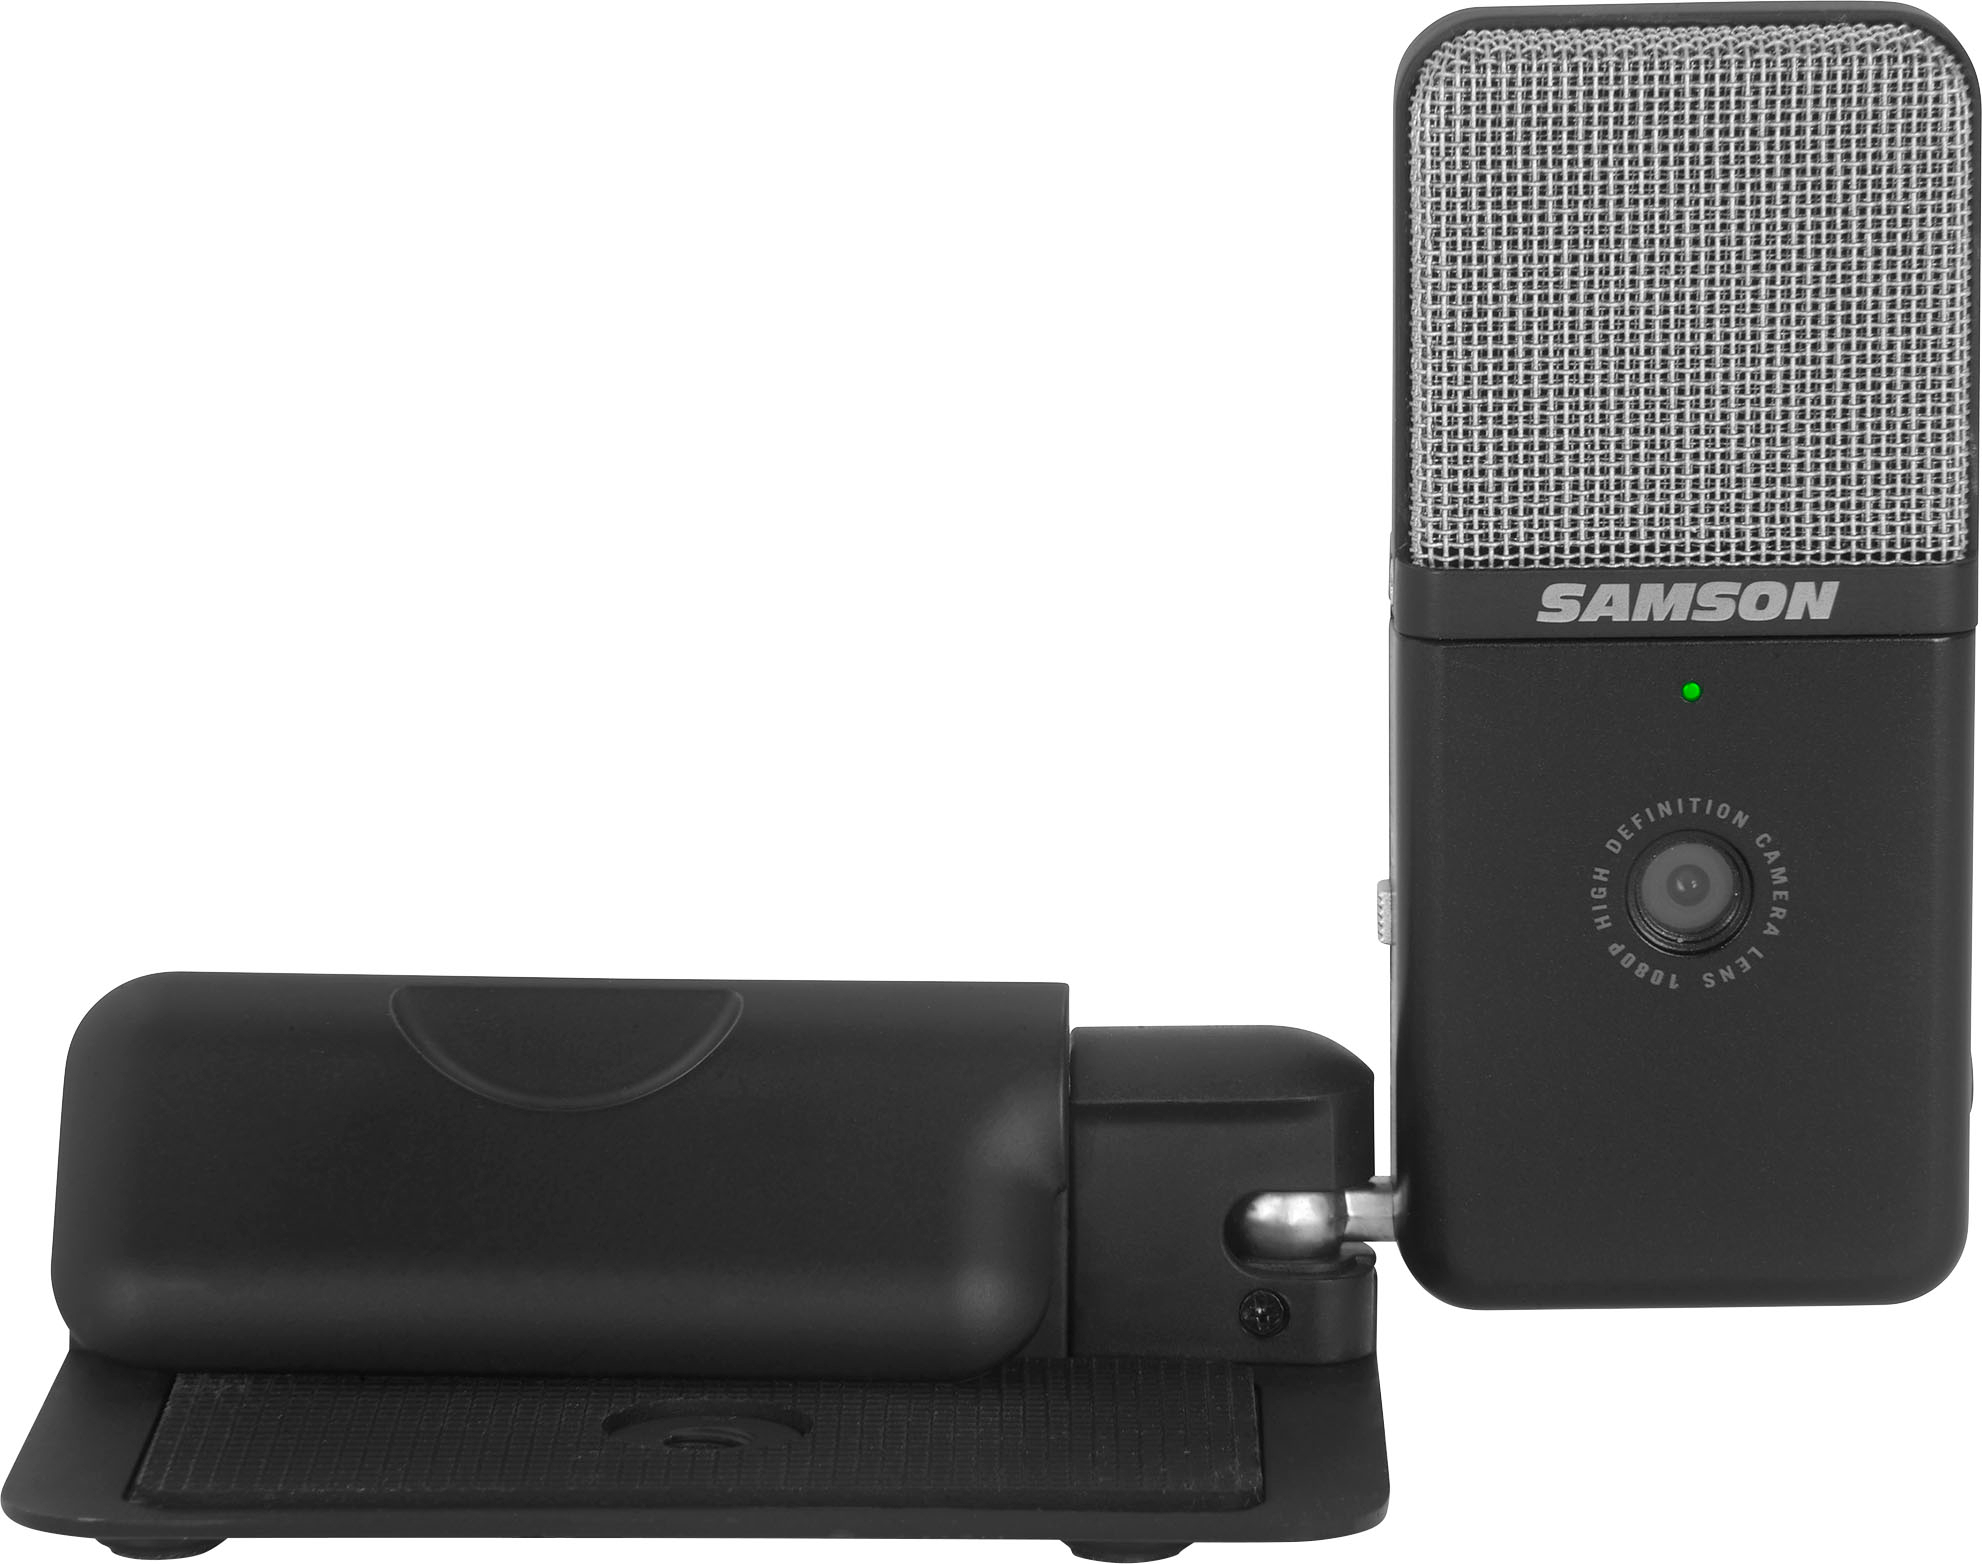 Samson Mic Video USB Microphone with HD Webcam SAGOMICVID - Buy